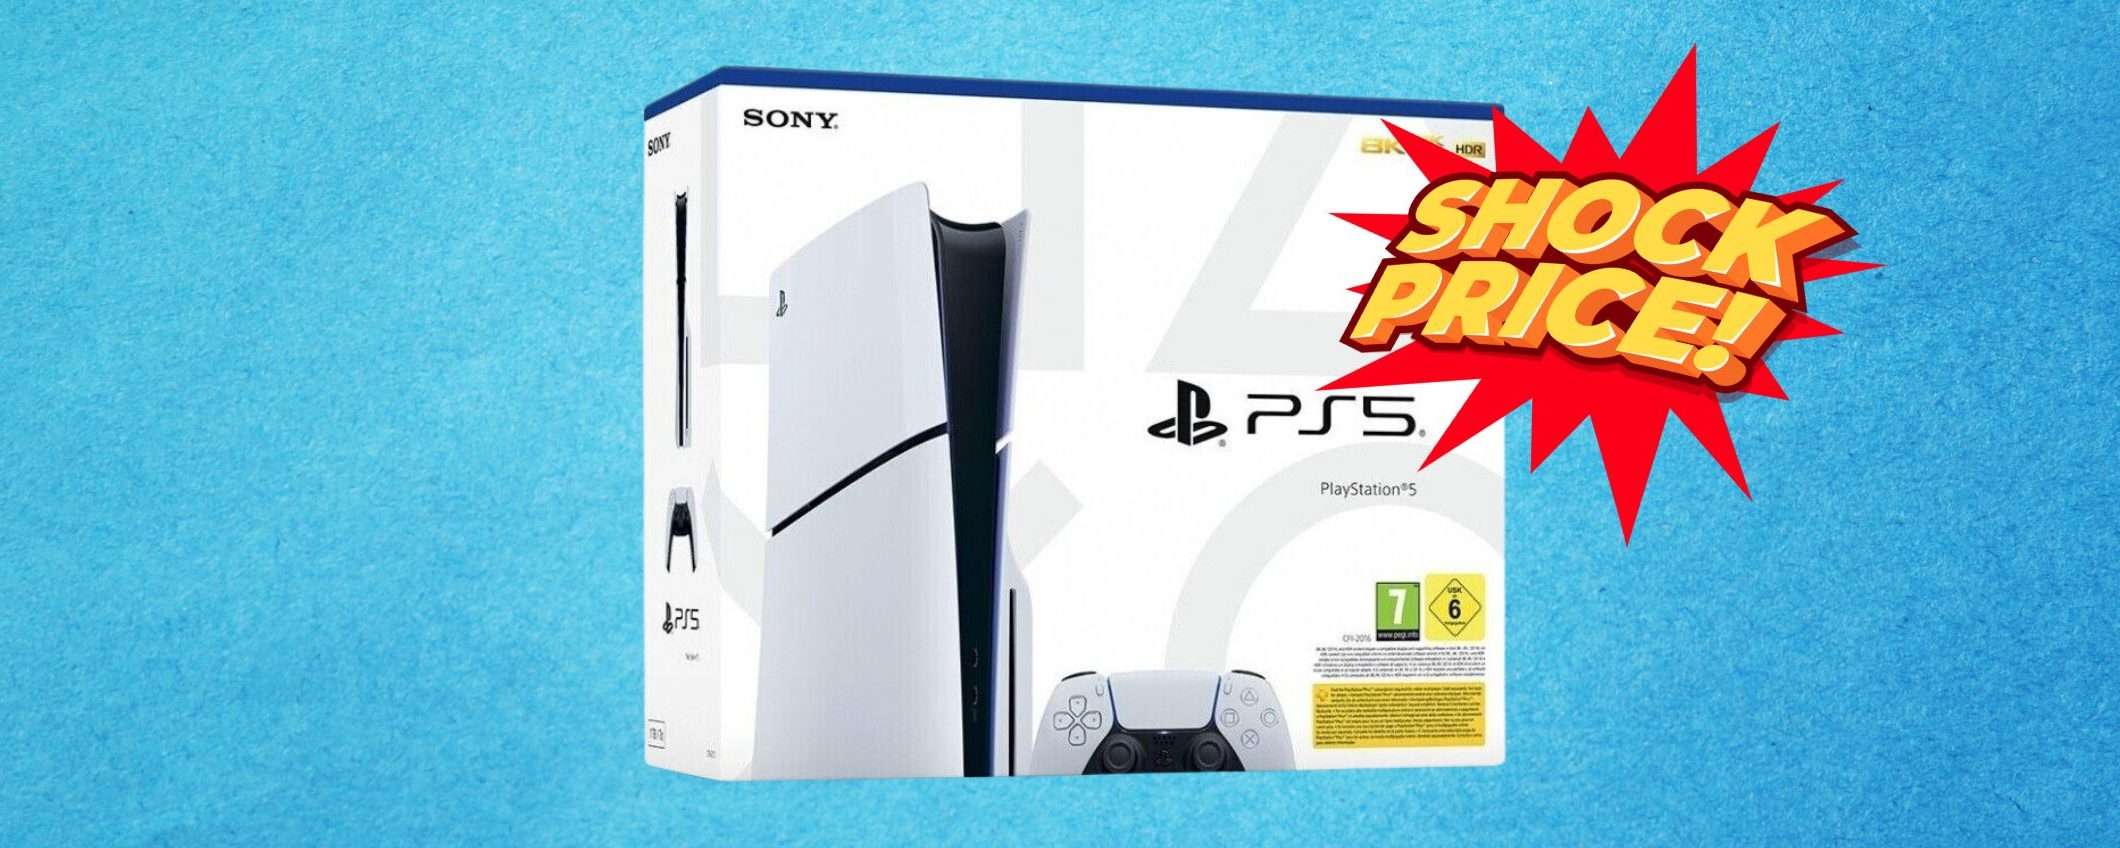 PS5 Slim: sconto ASSURDO su eBay con un nuovo coupon (-115,99€) (agg.)